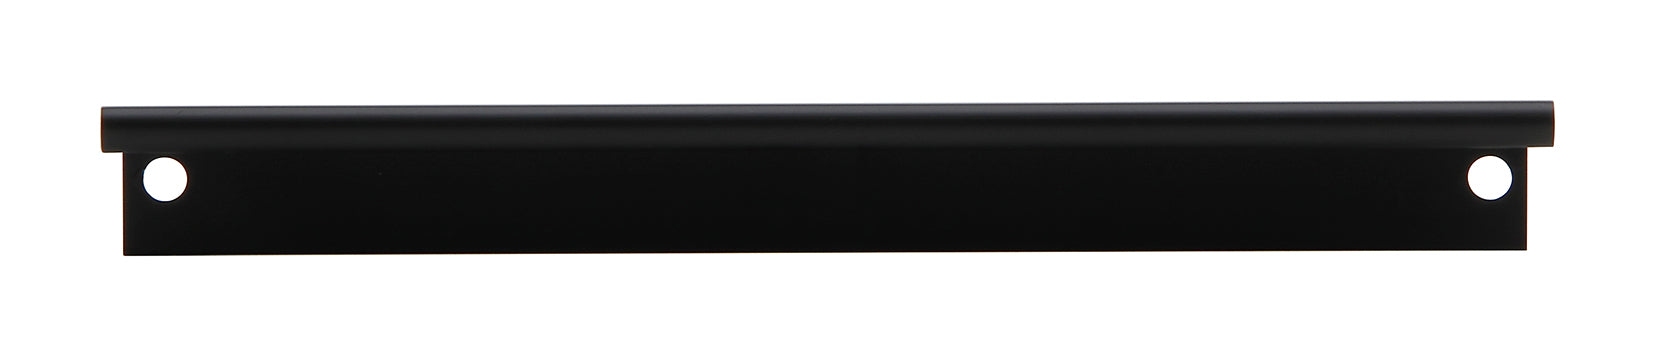 Silverline P1001 Aluminum Mount Finger Edge Tab Pull Handle in Matte Black Finish Various Sizes